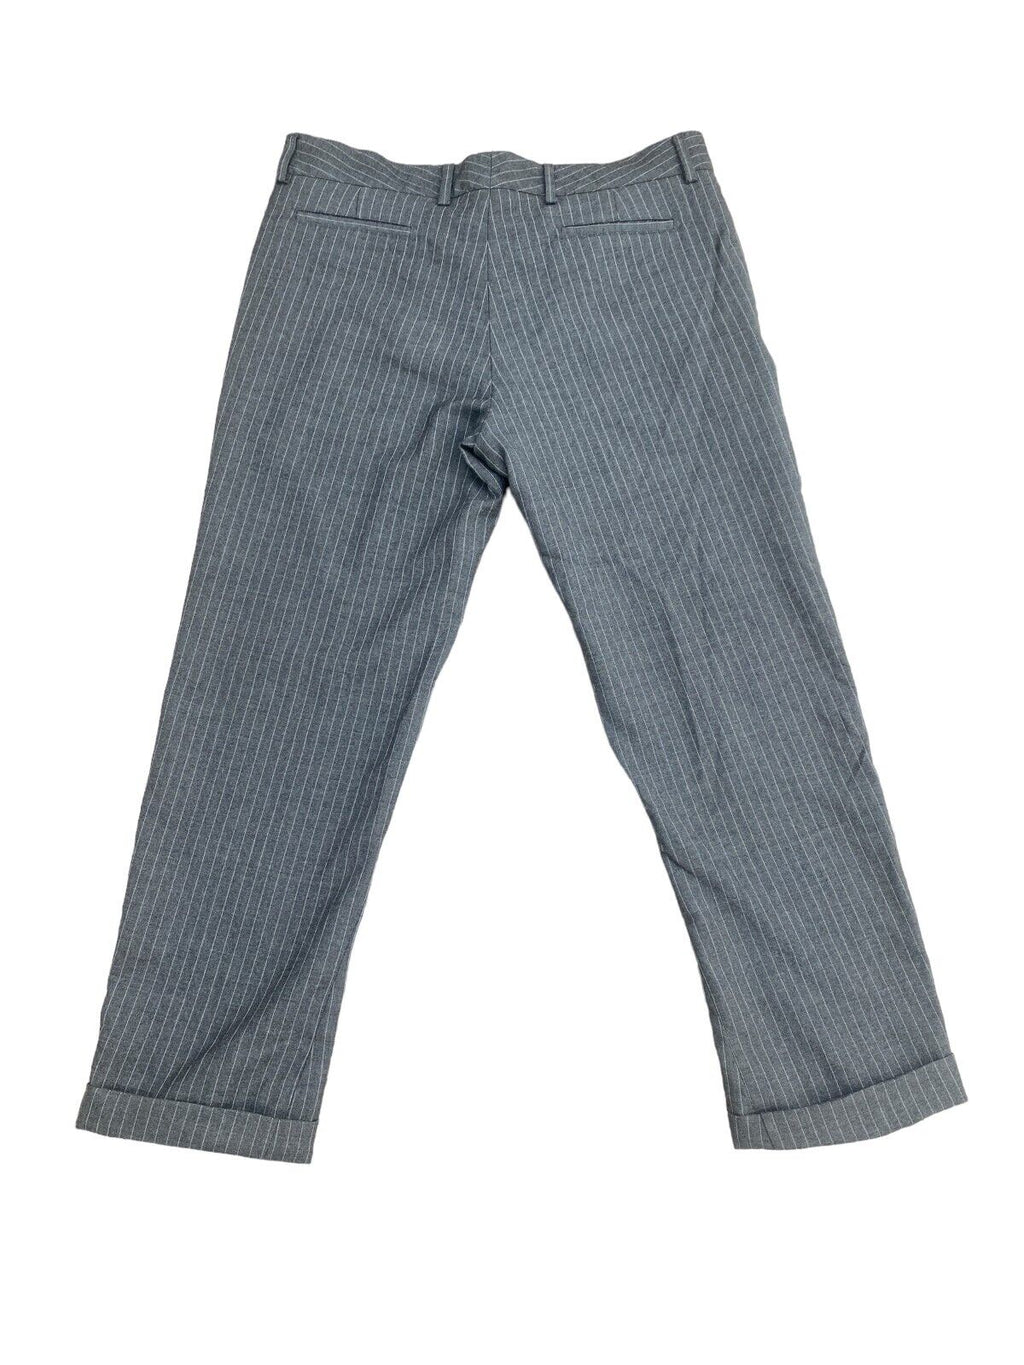 FW 2003 Grey Striped Formal Pants